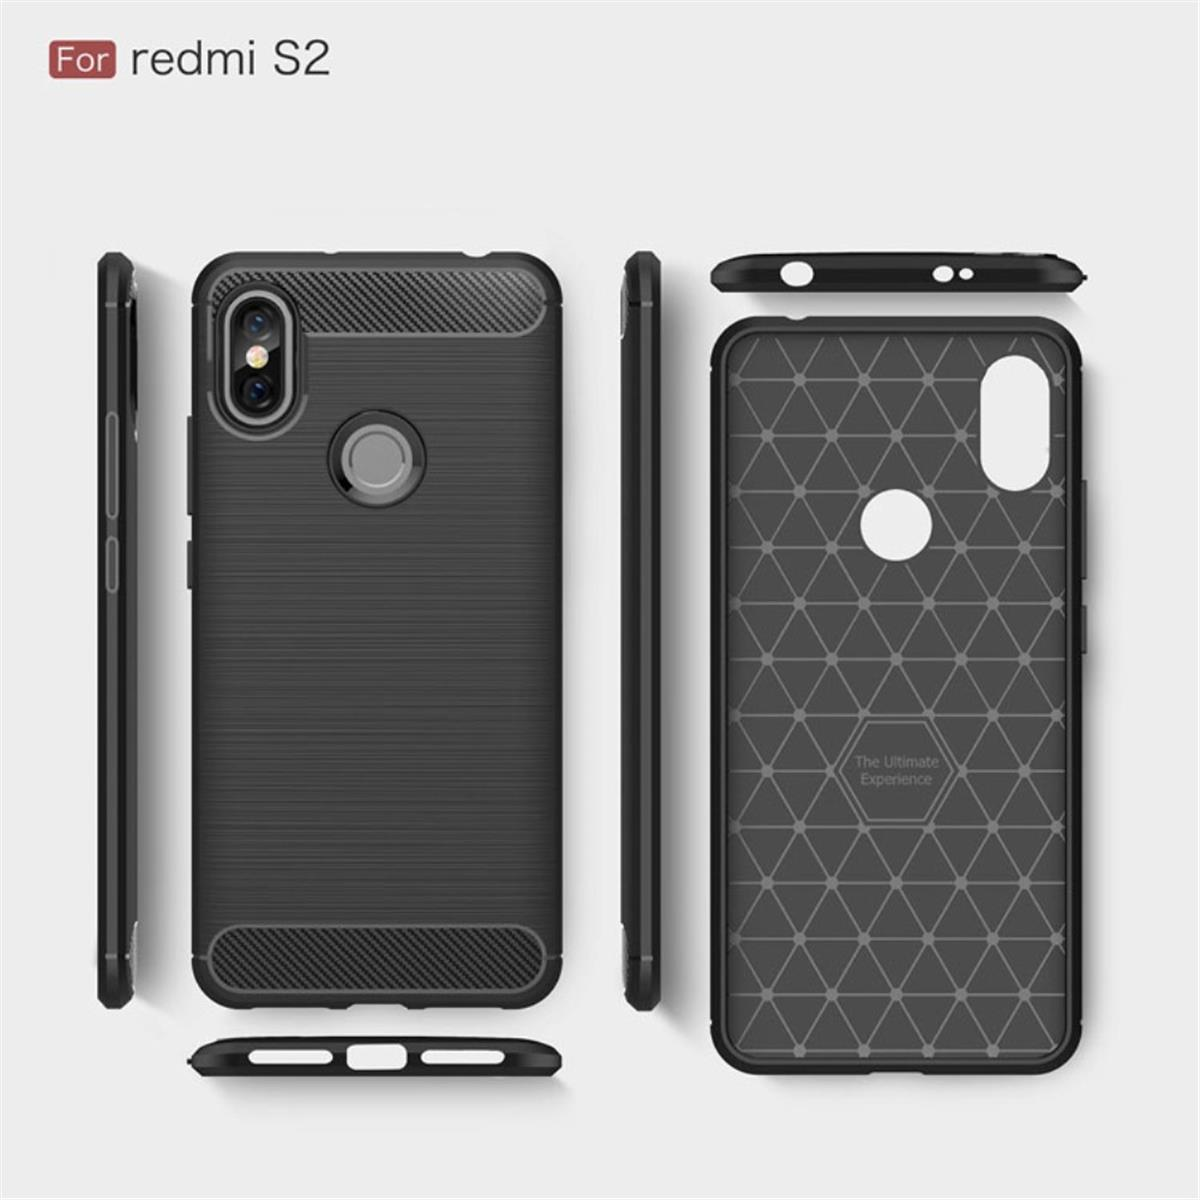 COVERKINGZ Handycase im Redmi Look, schwarz Carbon Xiaomi, Backcover, S2